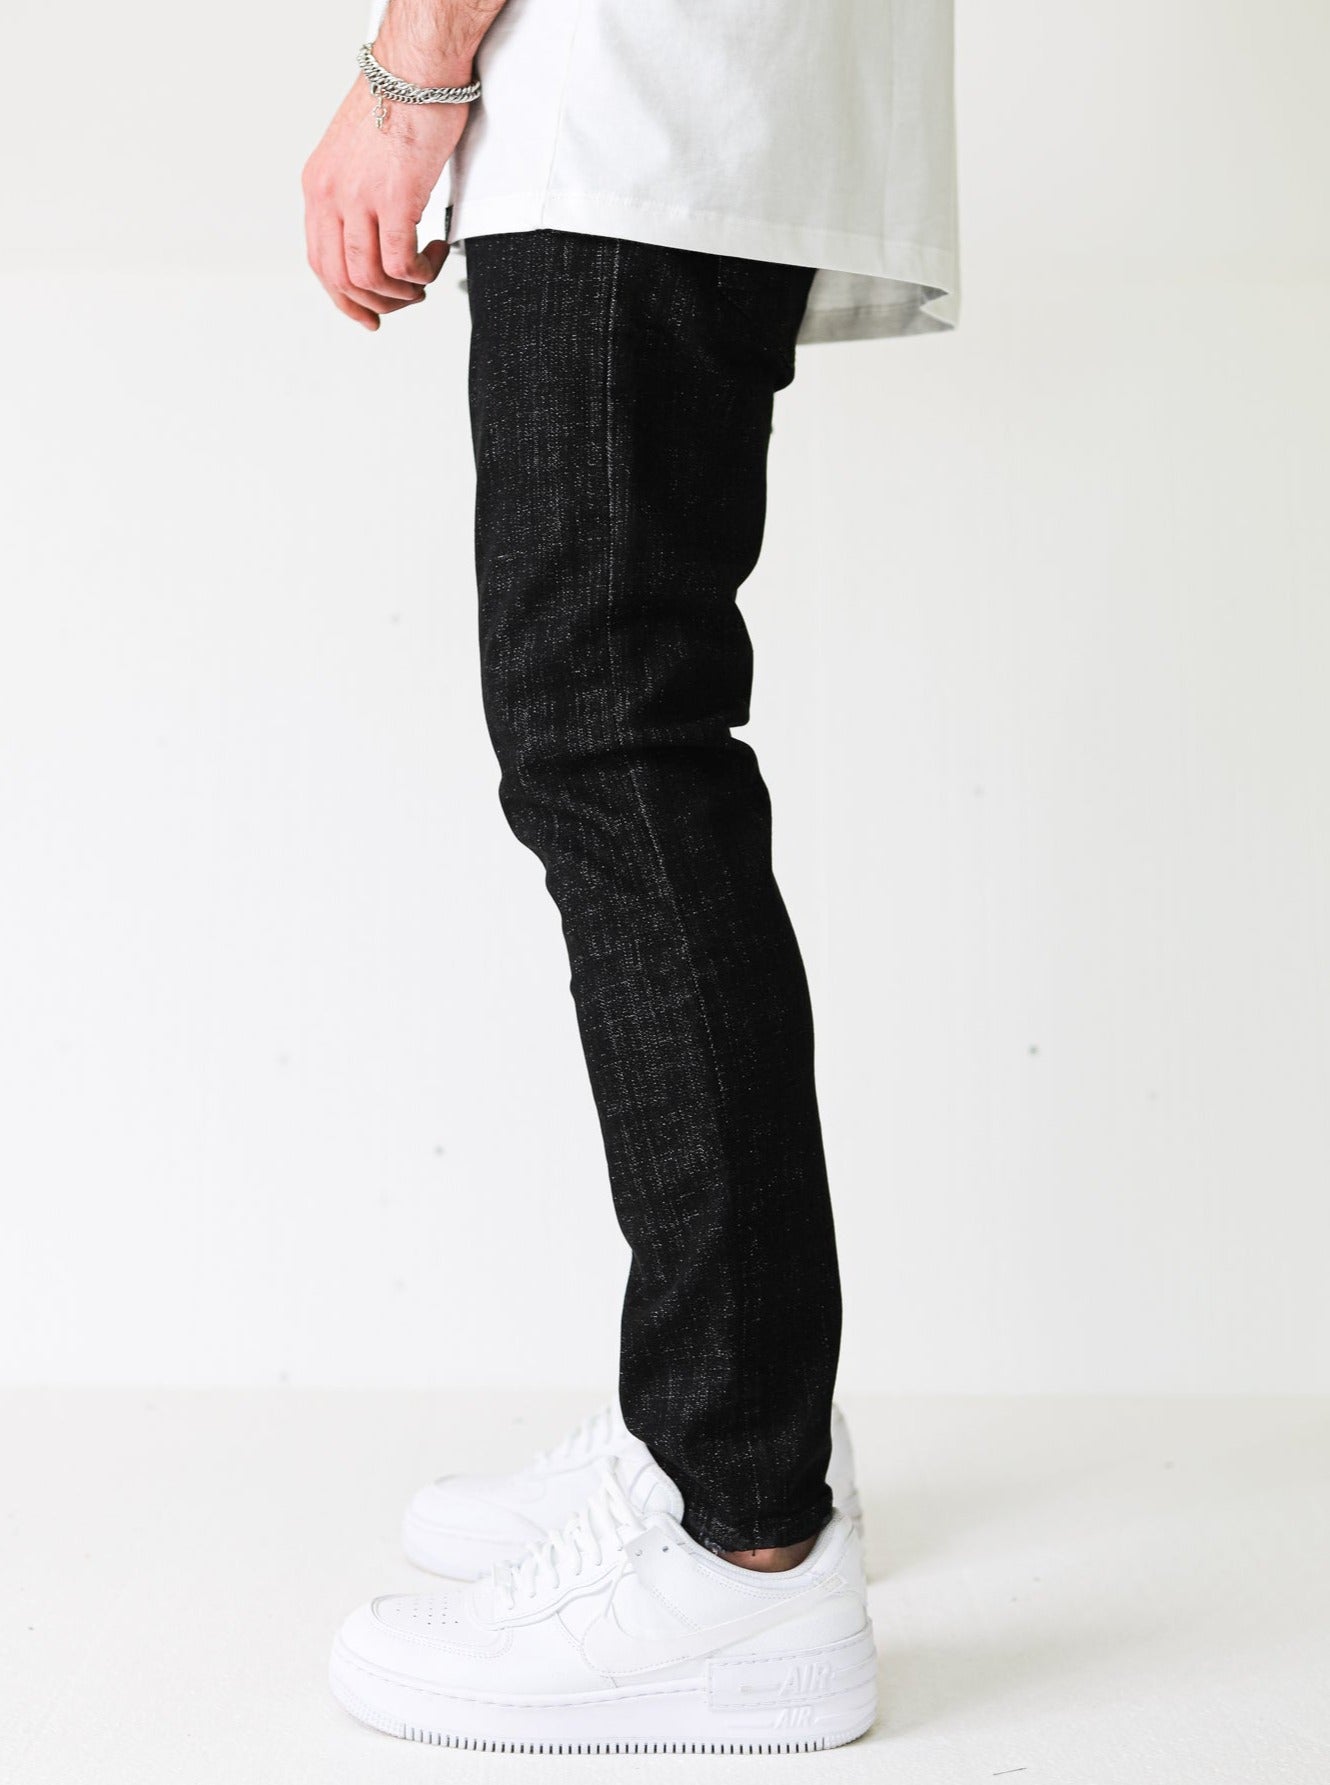 Premium Basic Black Jeans With Chain